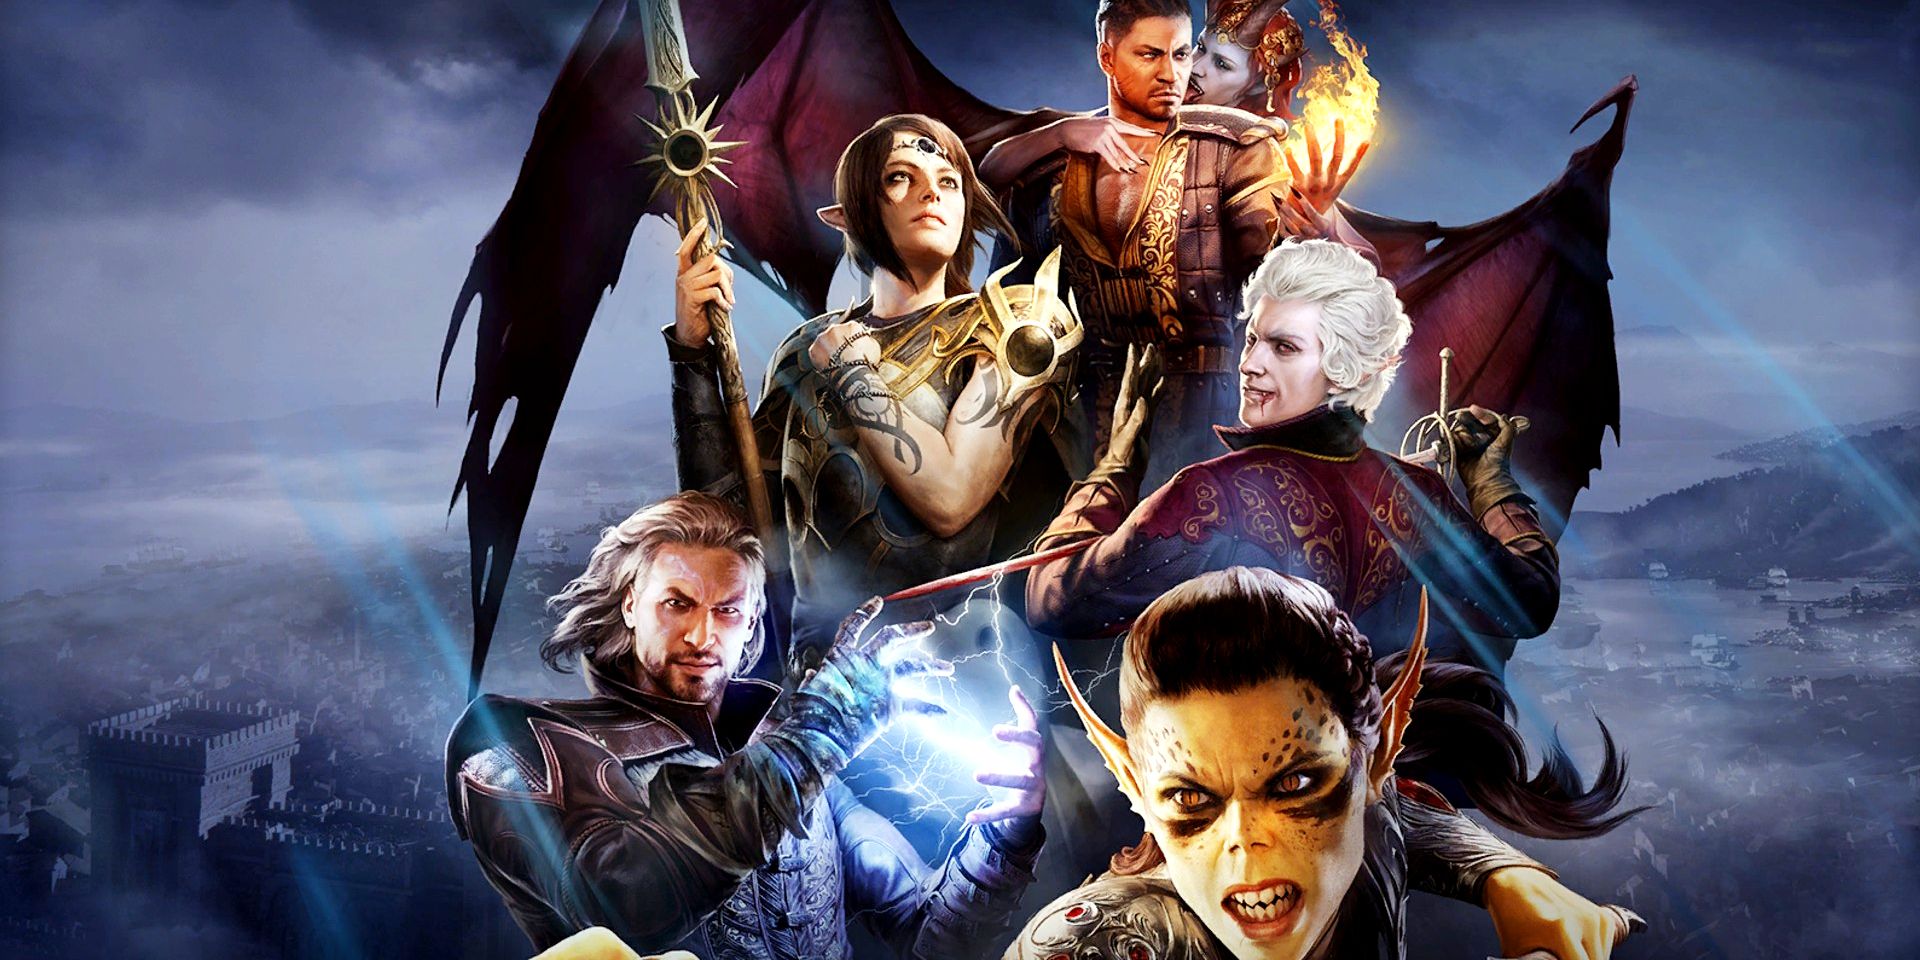 Baldur's Gate 3 promo image with the companions.